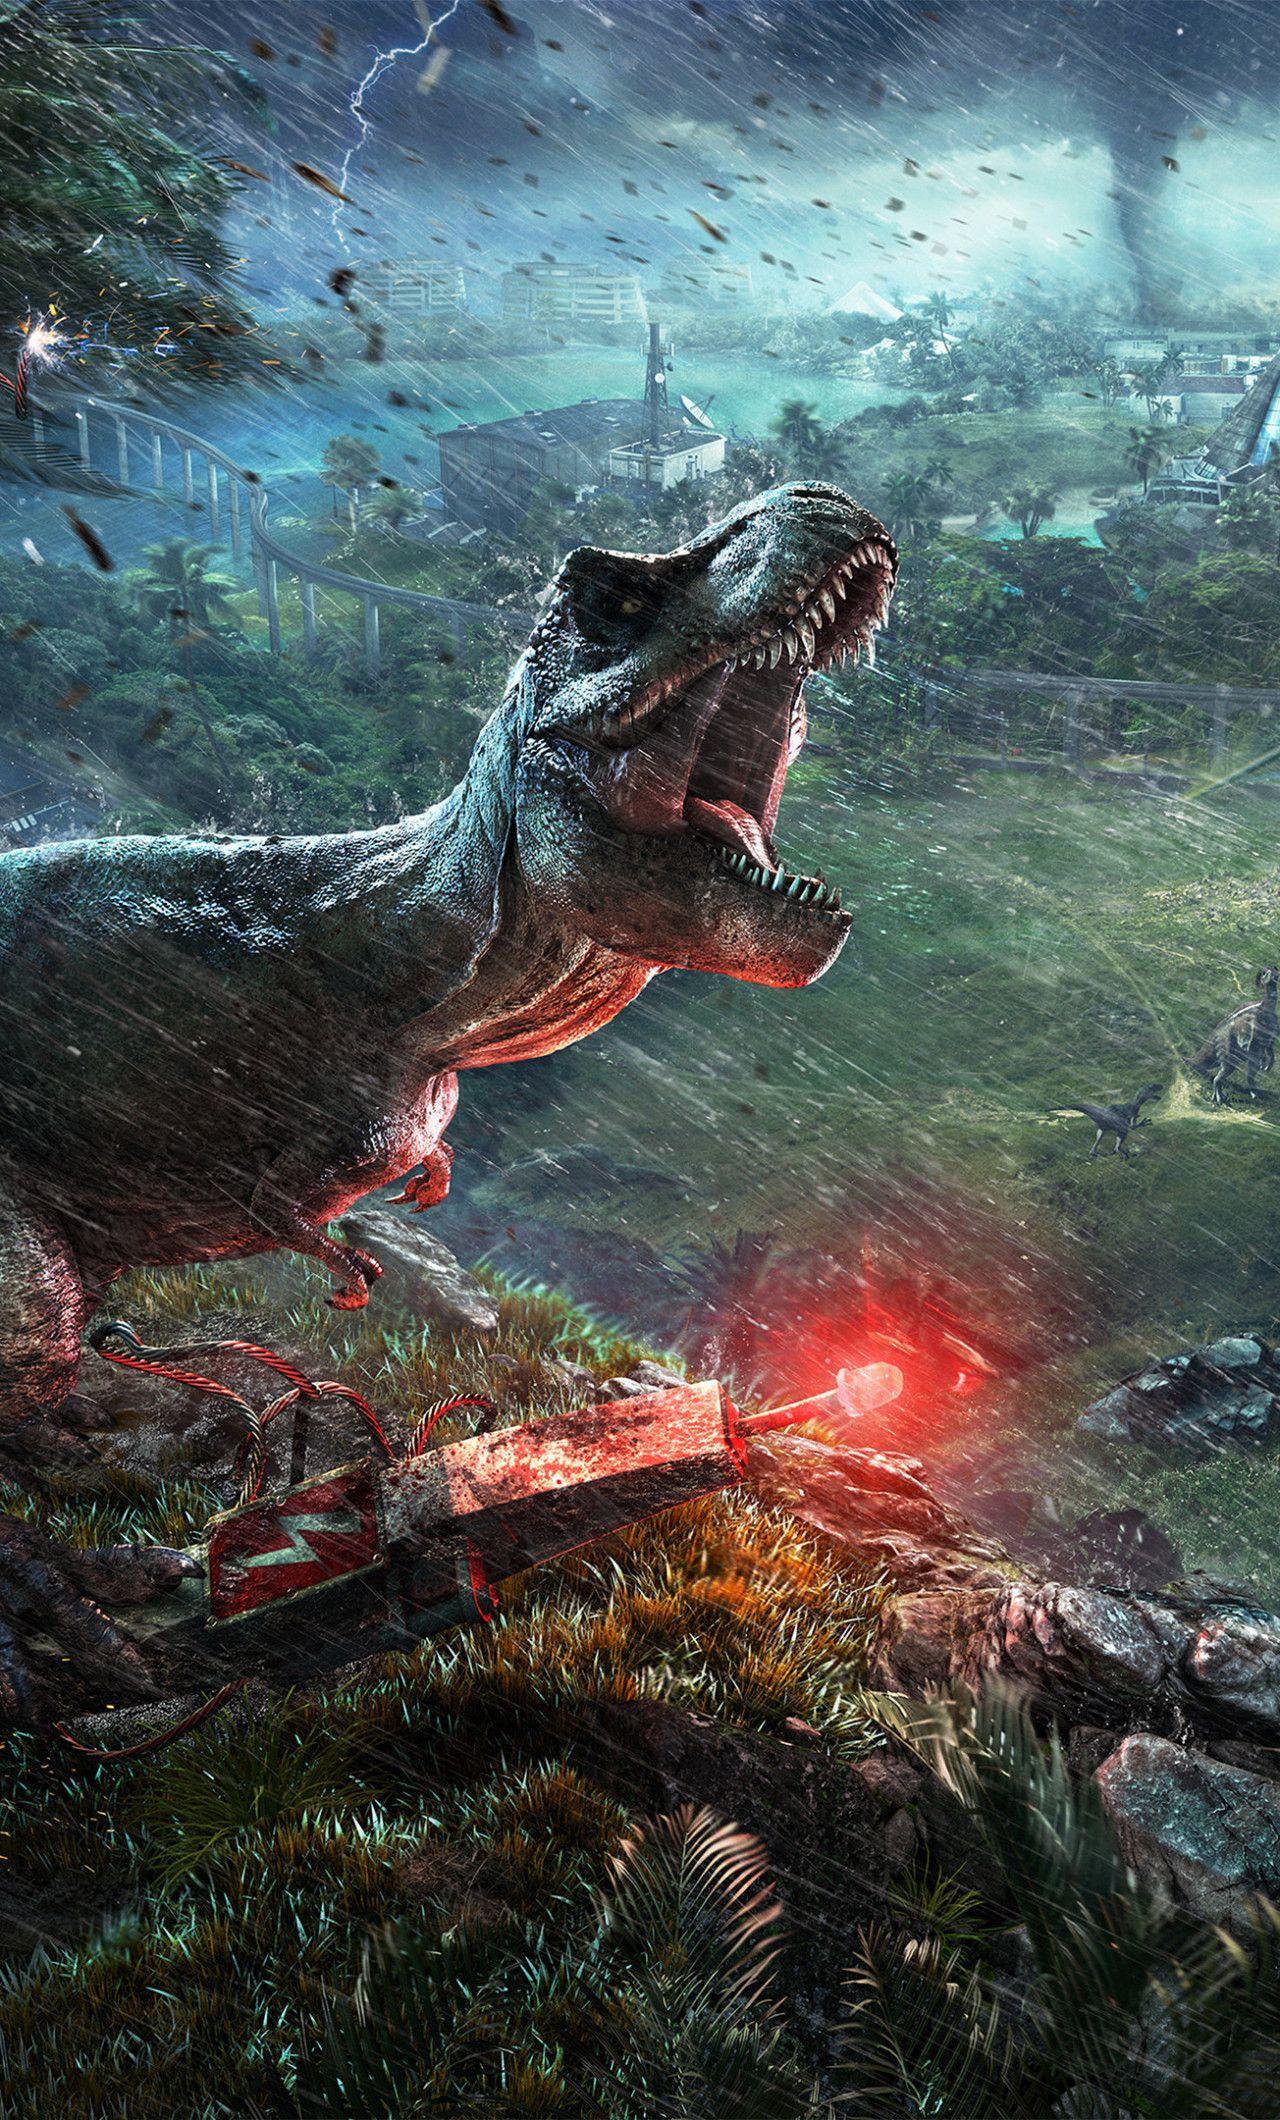  Jurassic  Park  4K  Wallpapers  Top Free Jurassic  Park  4K  